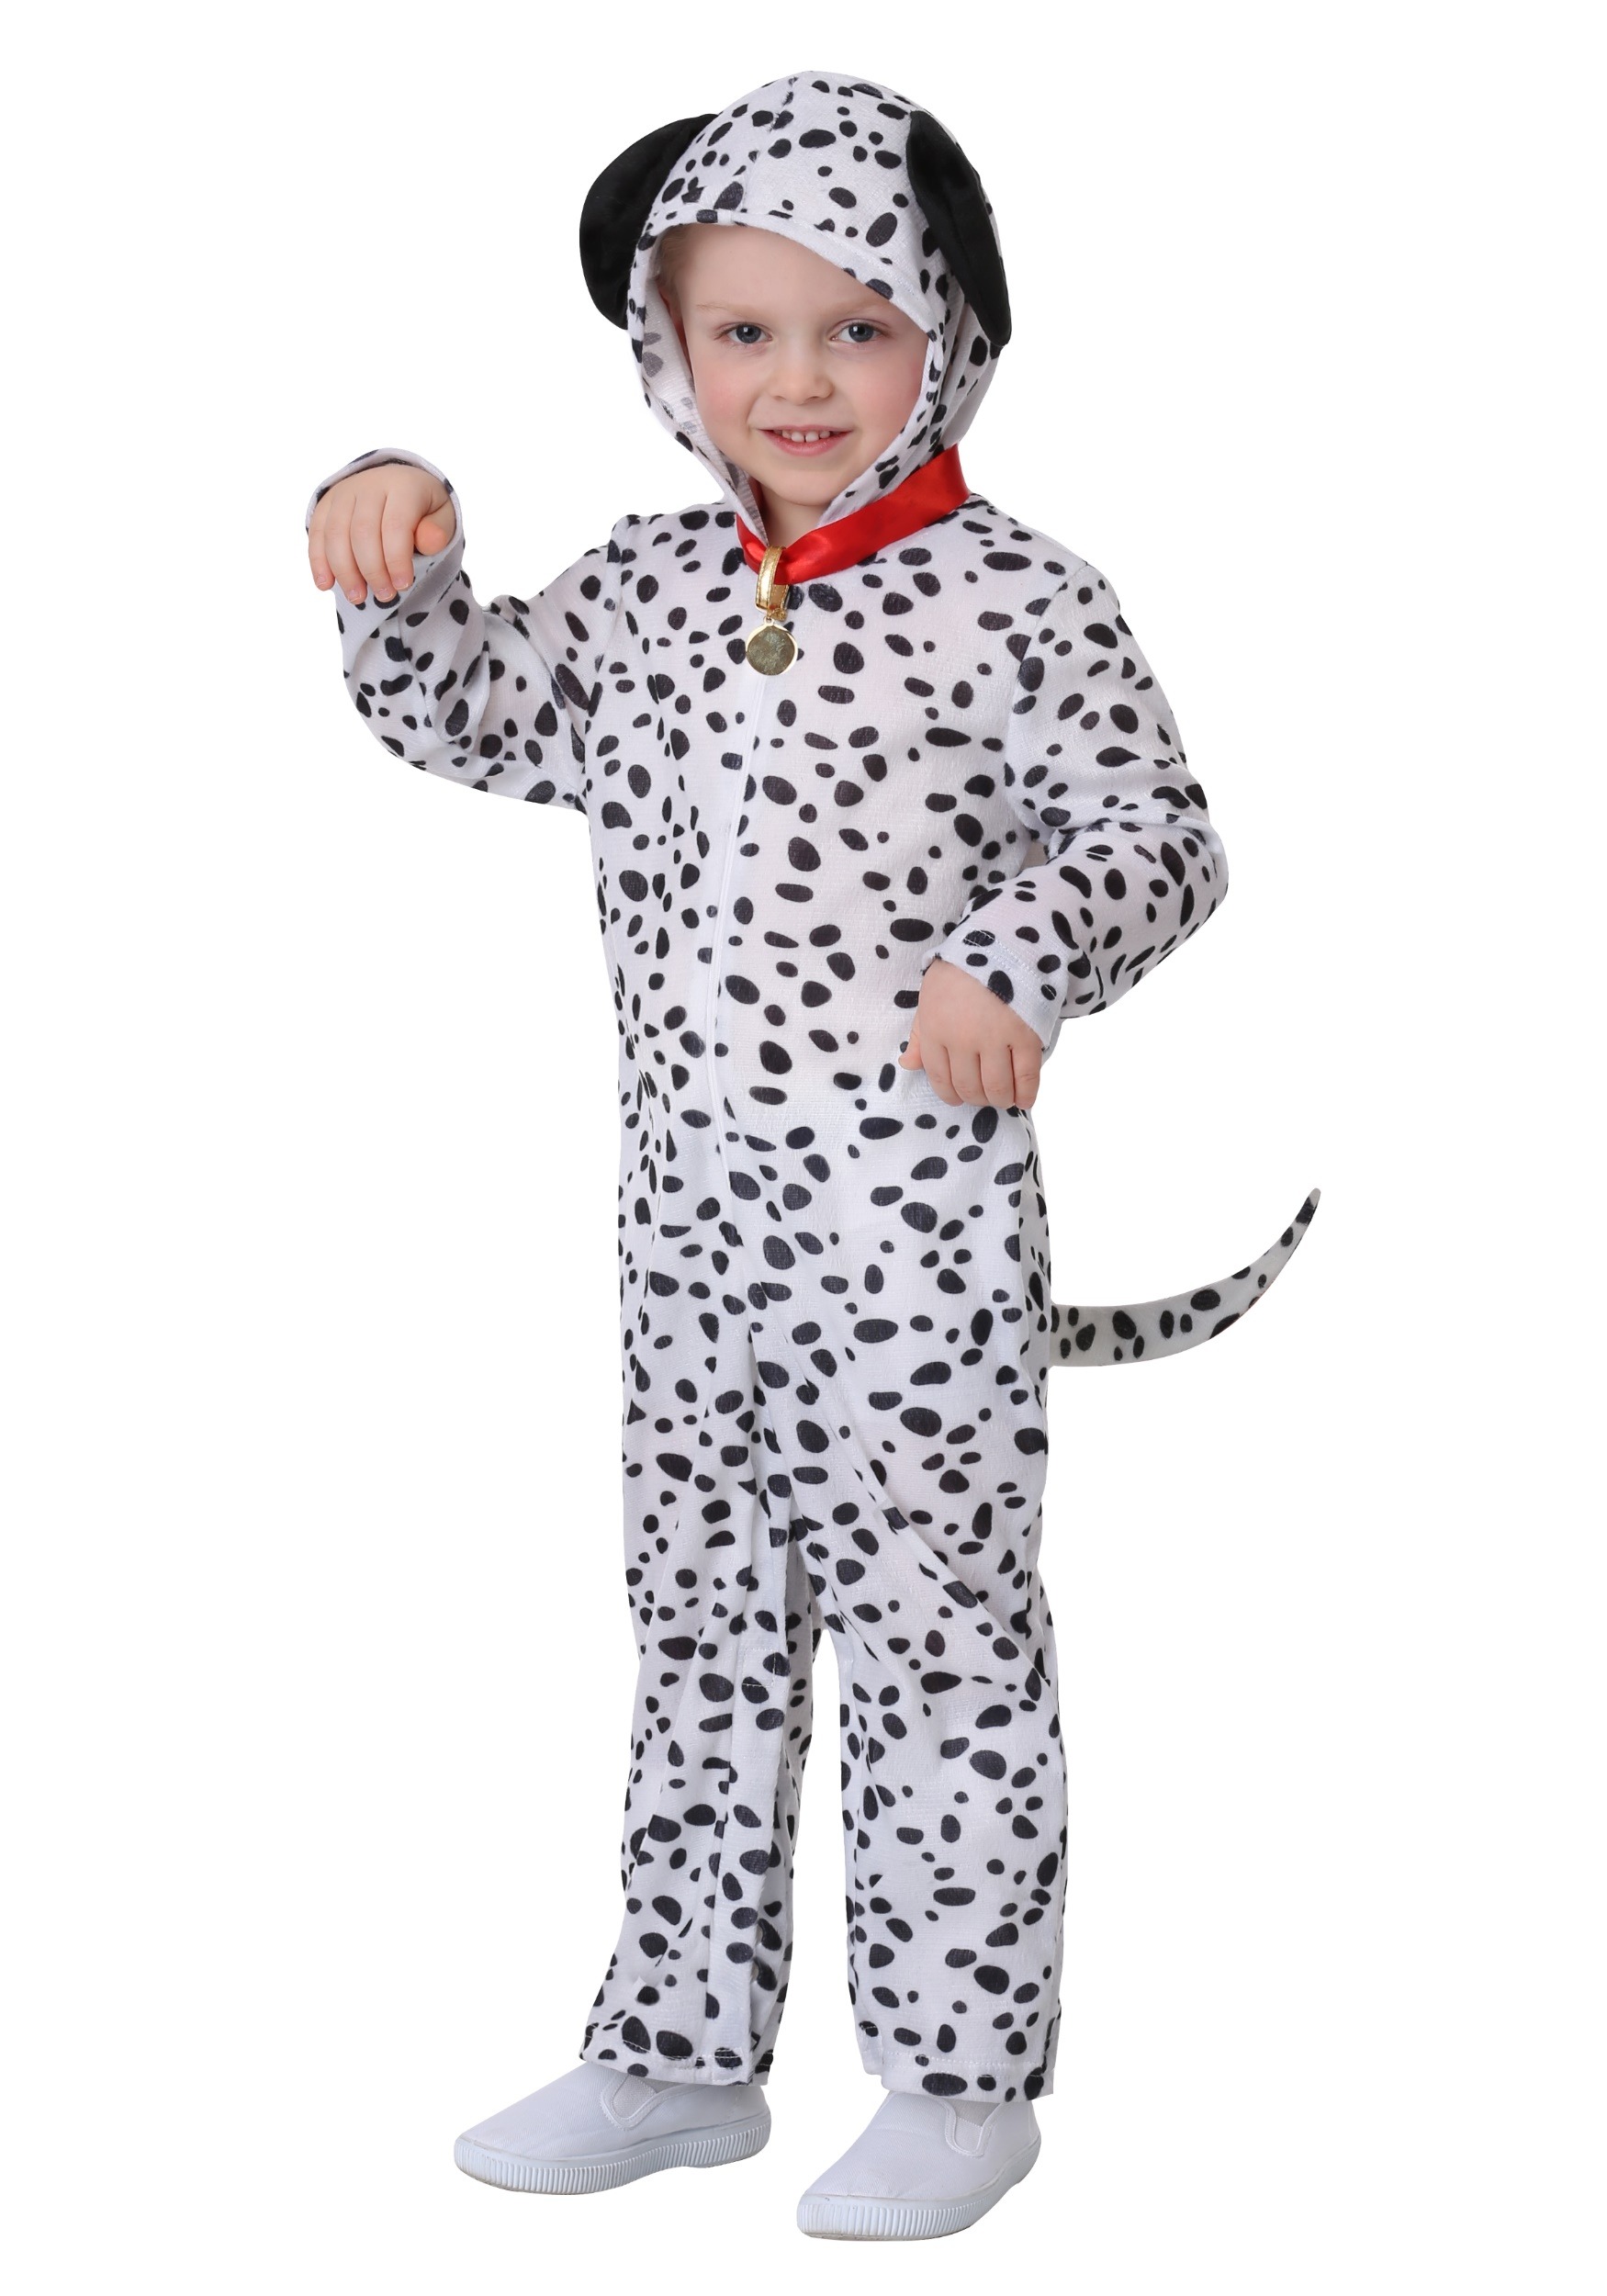 Photos - Fancy Dress Toddler FUN Costumes Delightful Dalmatian  Costume Black/White FUN0428T 